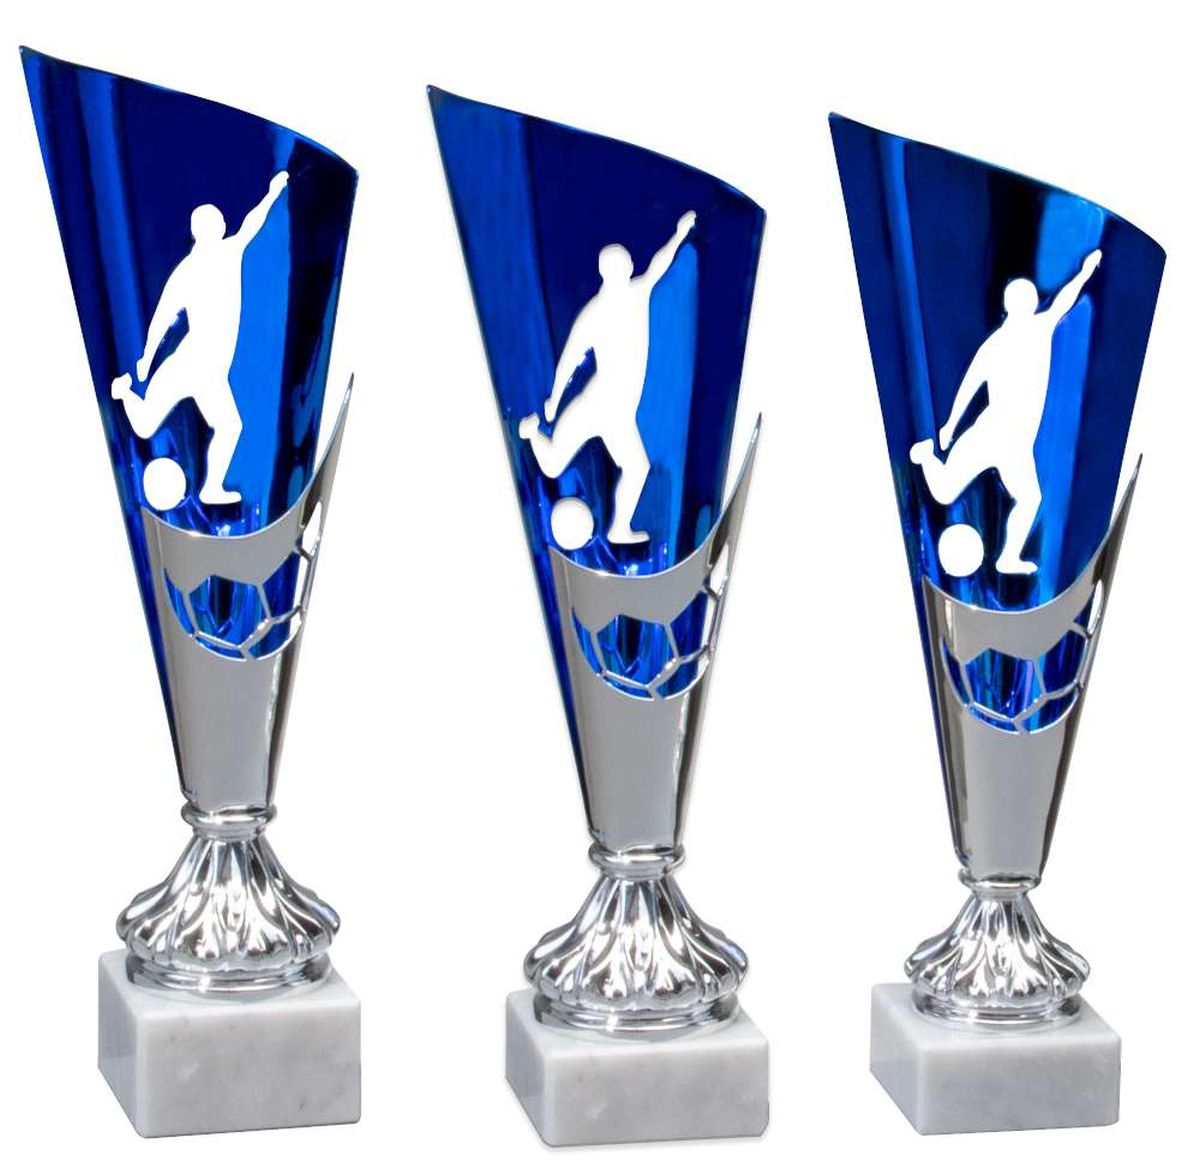 Pokal Soccer Silber/Blau - Größe: 310mm